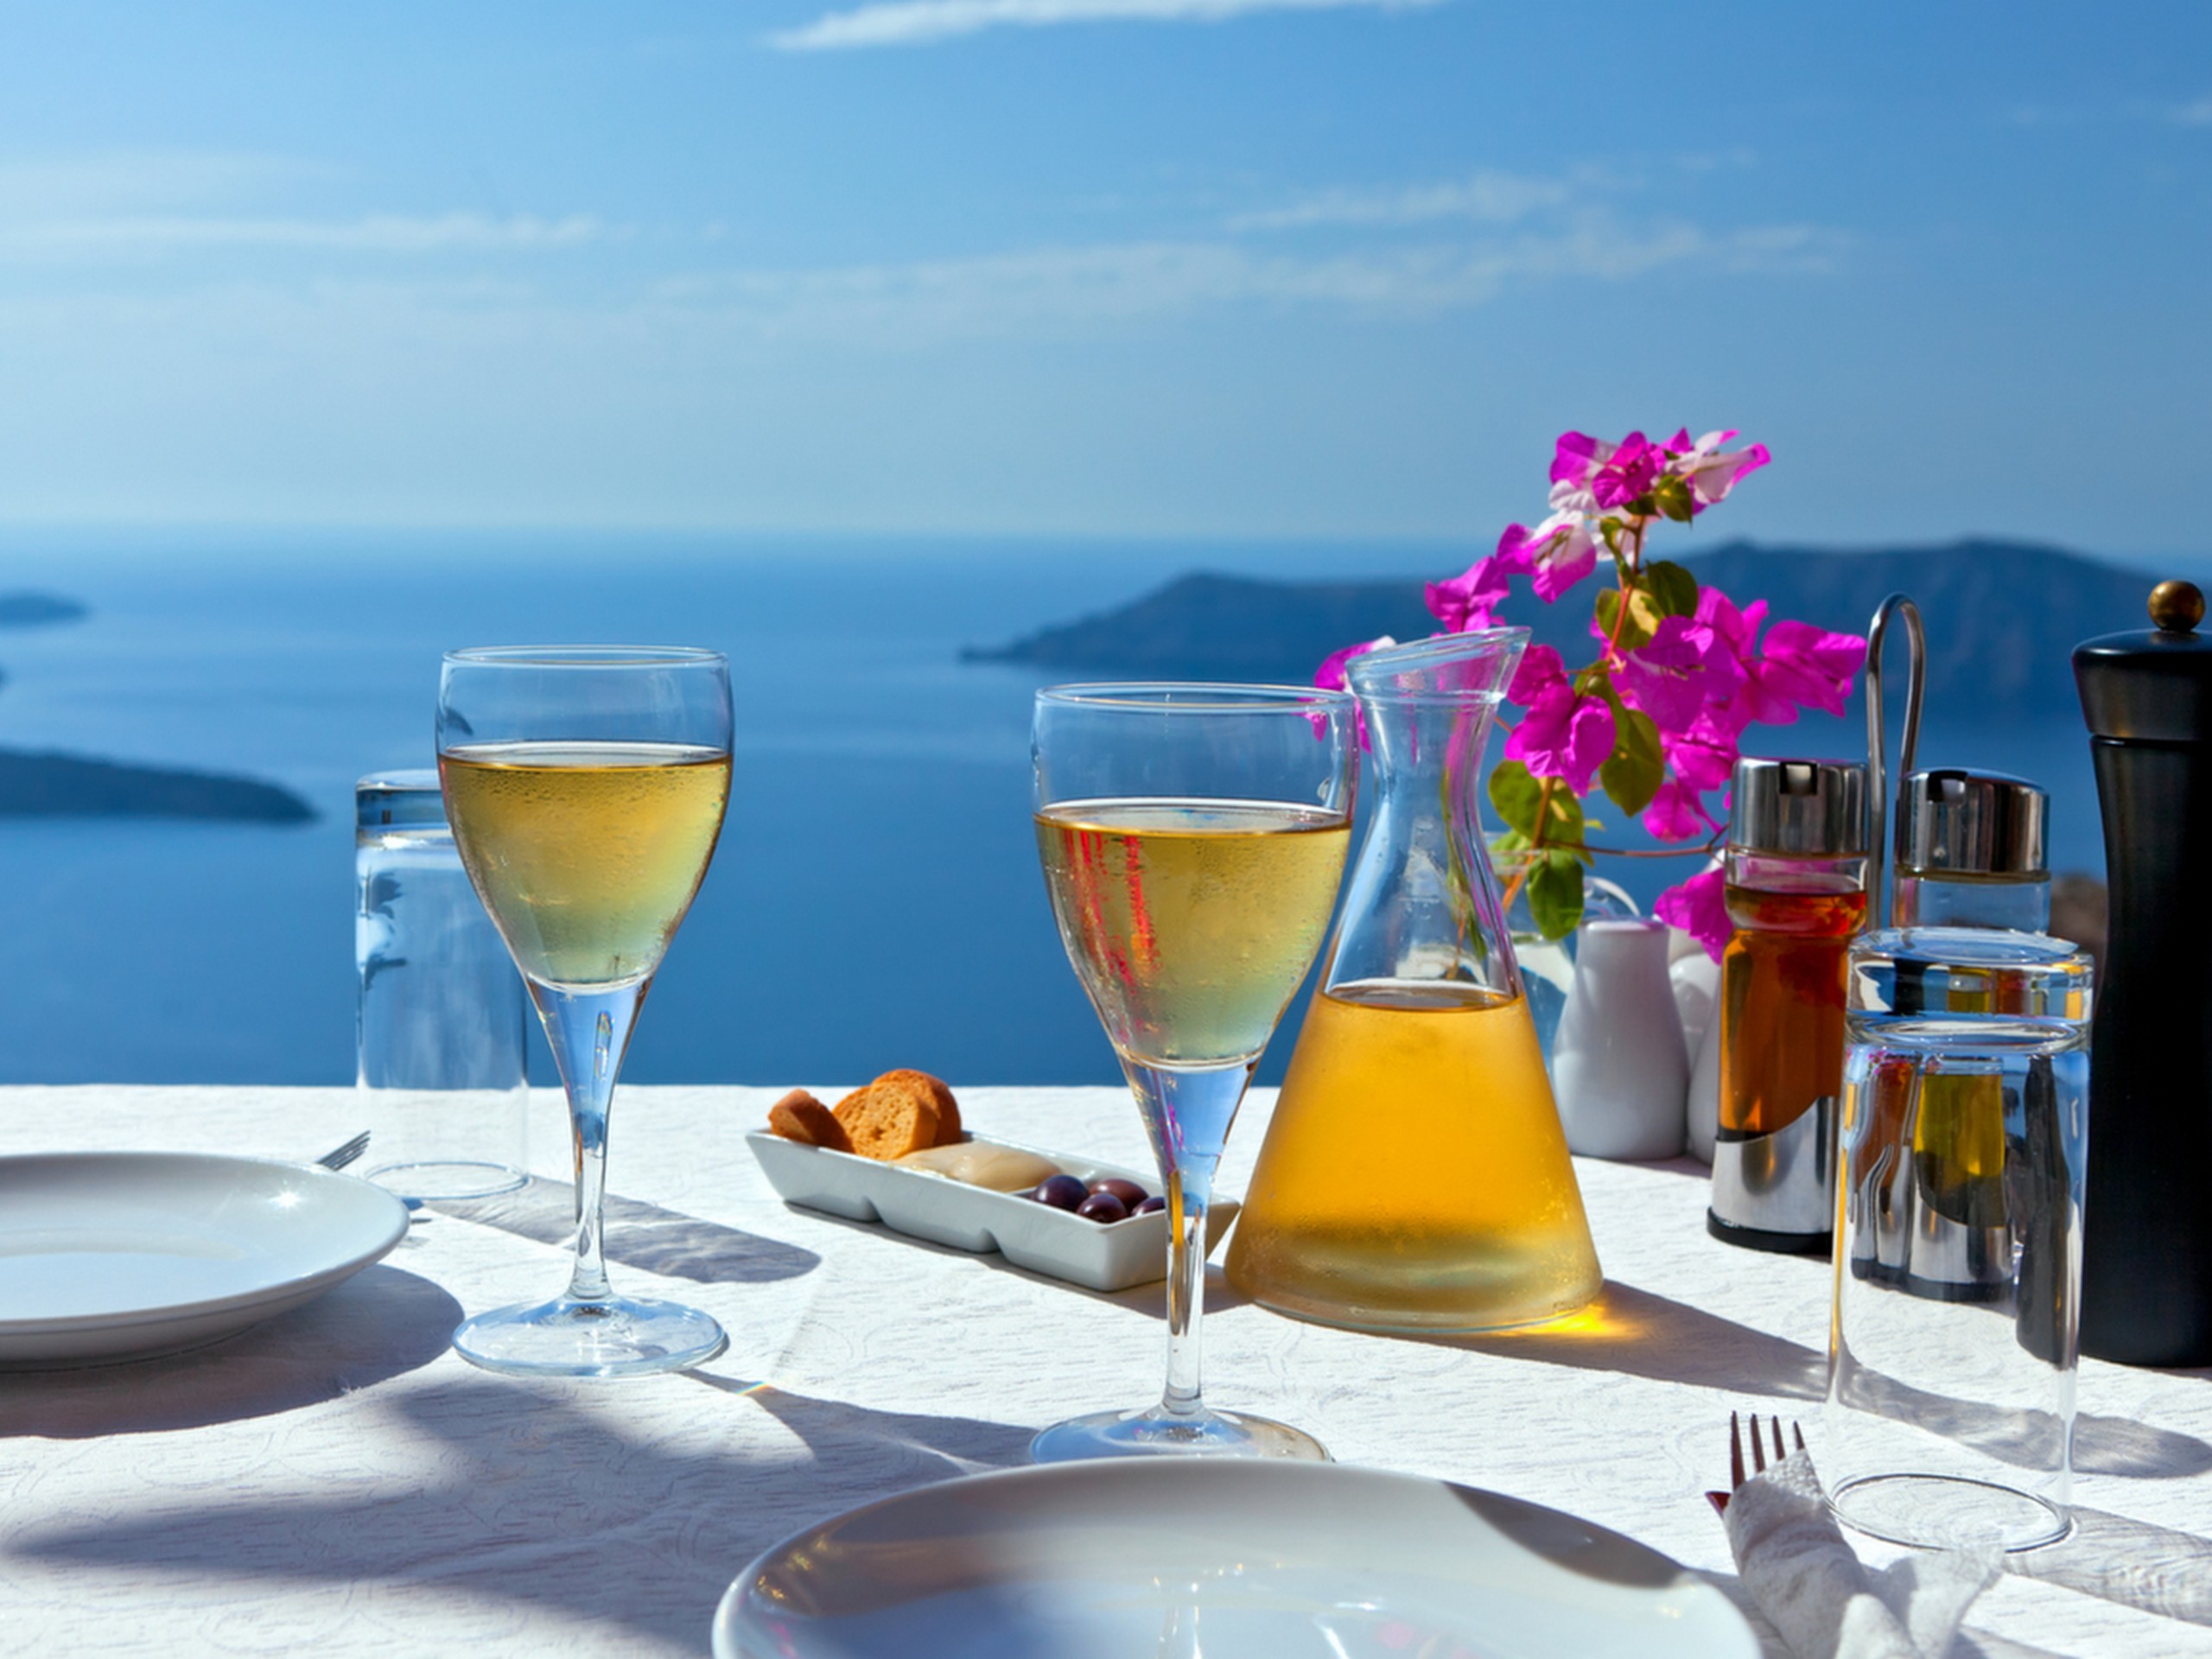 Lunch time in Santorini